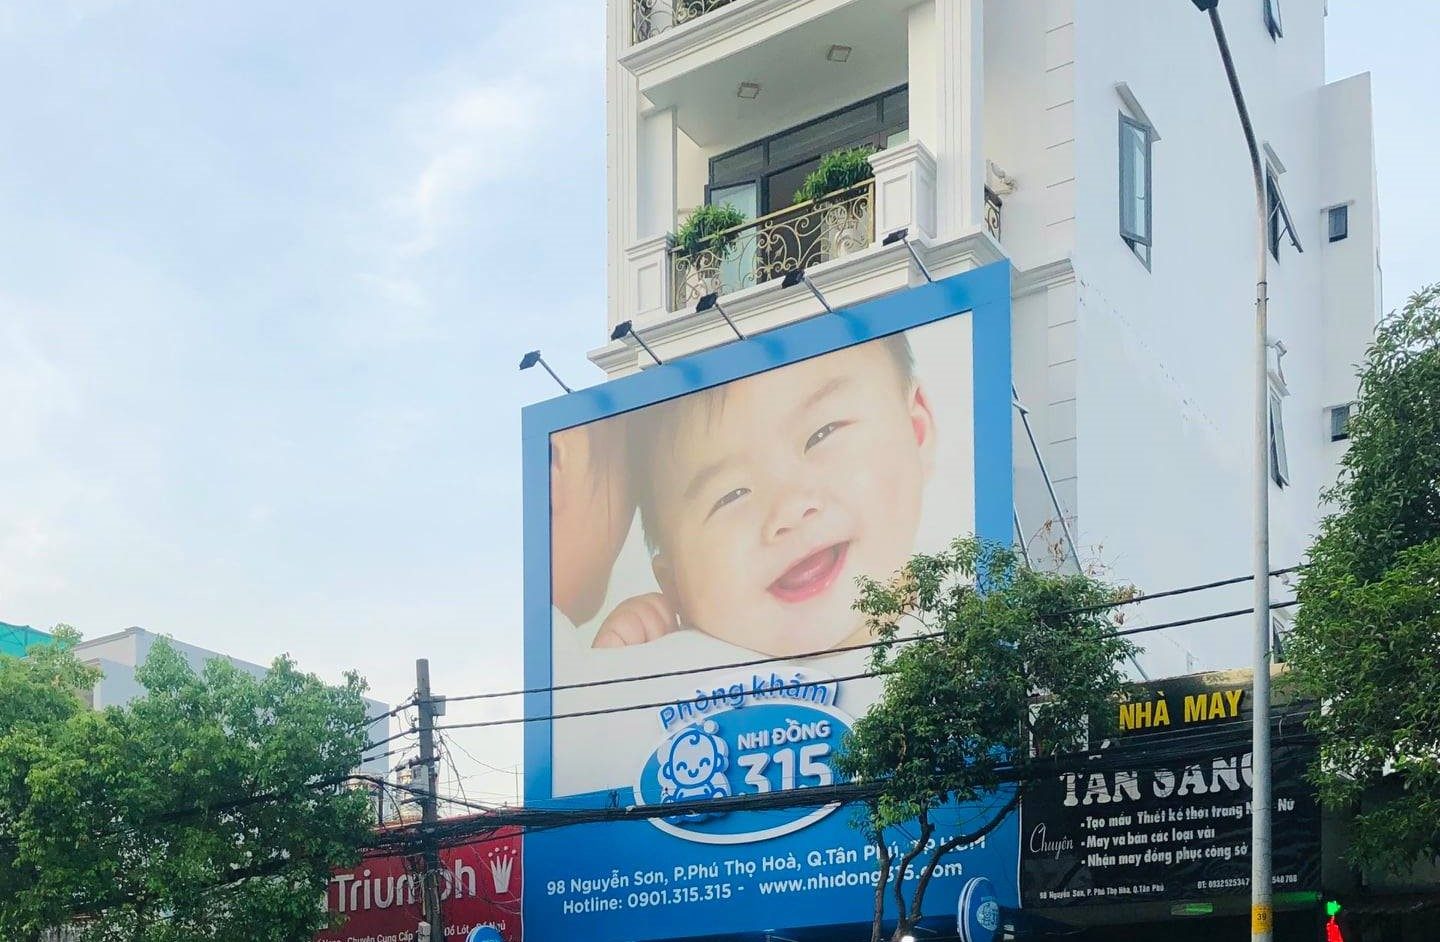 bda-capital-partners-invests-in-vietnamese-pediatric-clinic-nhi-dong-315